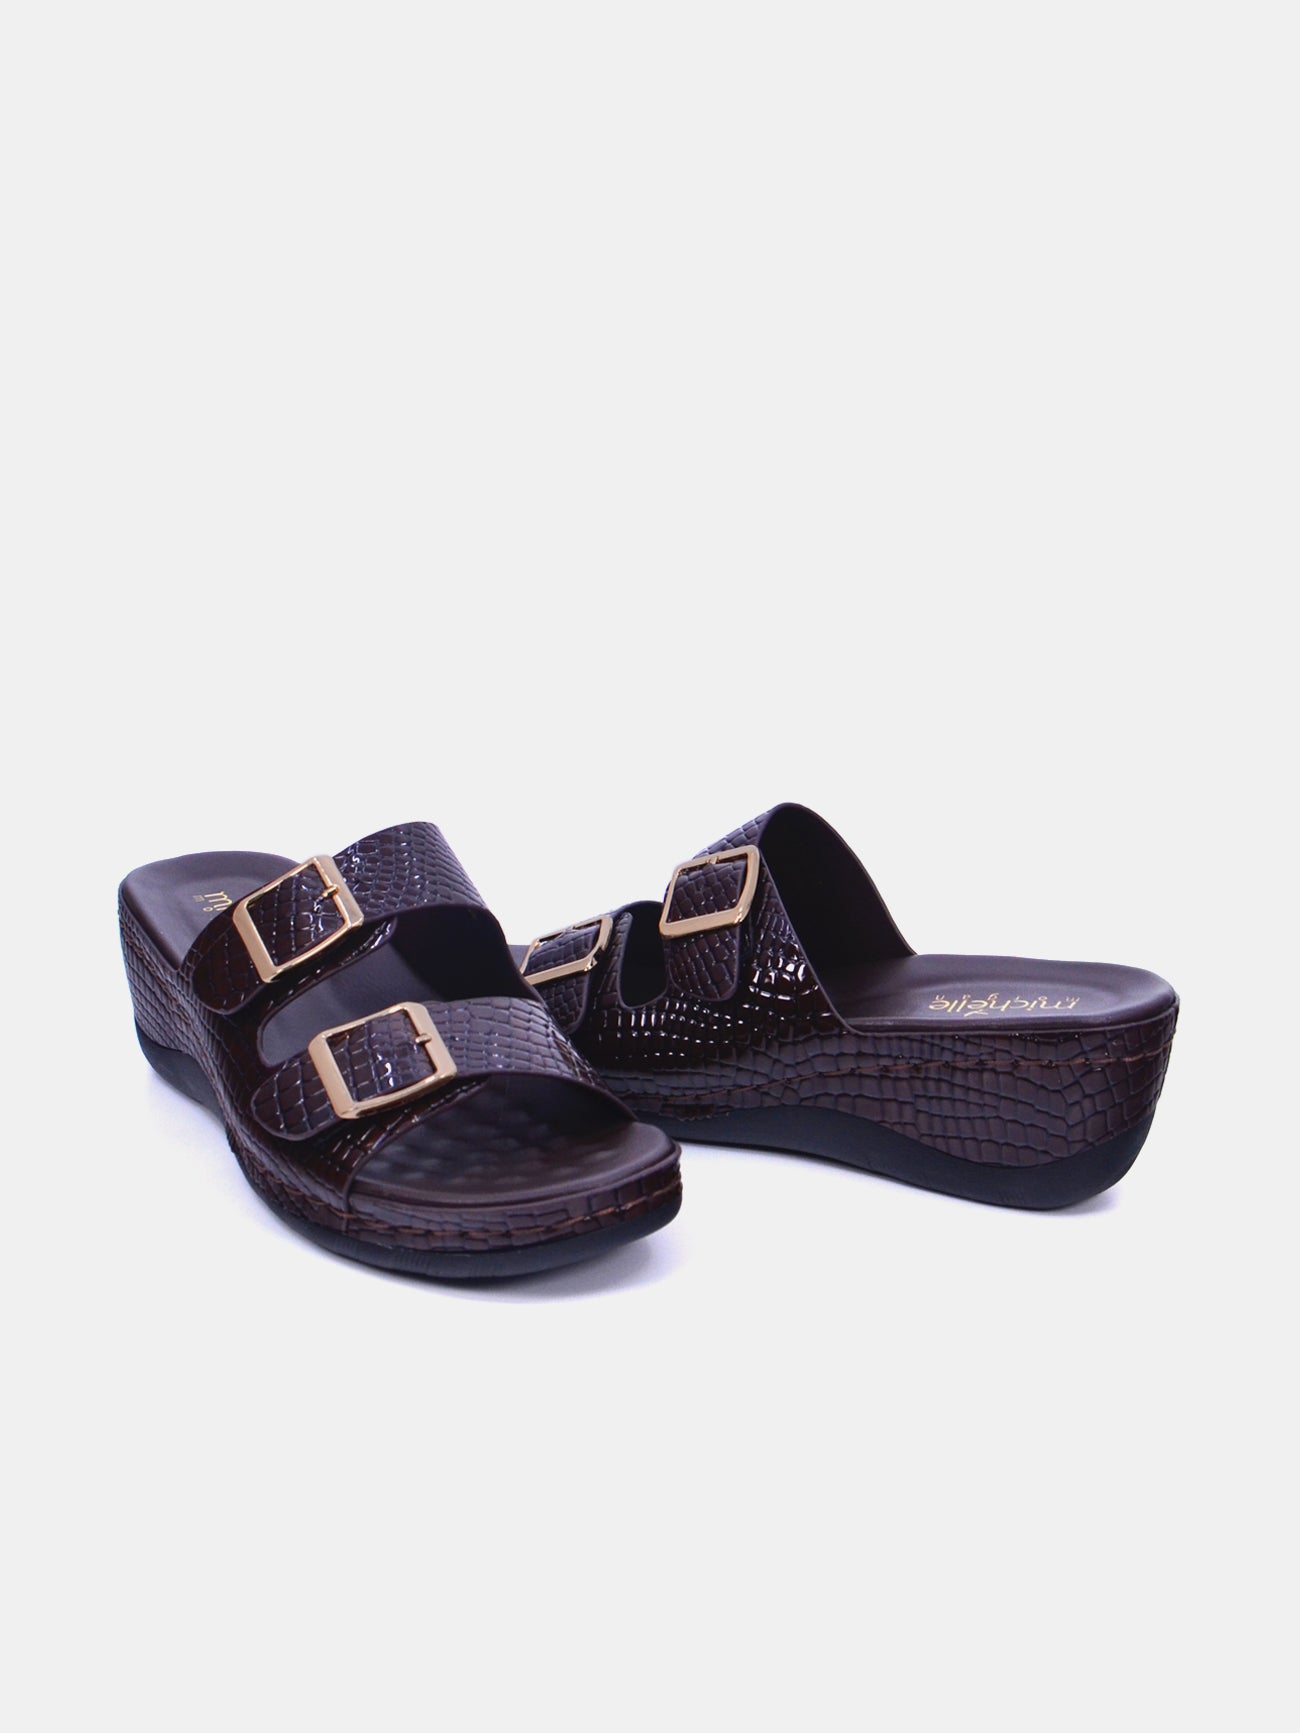 Michelle Morgan 314F7803 Women's Wedge Sandals #color_Brown